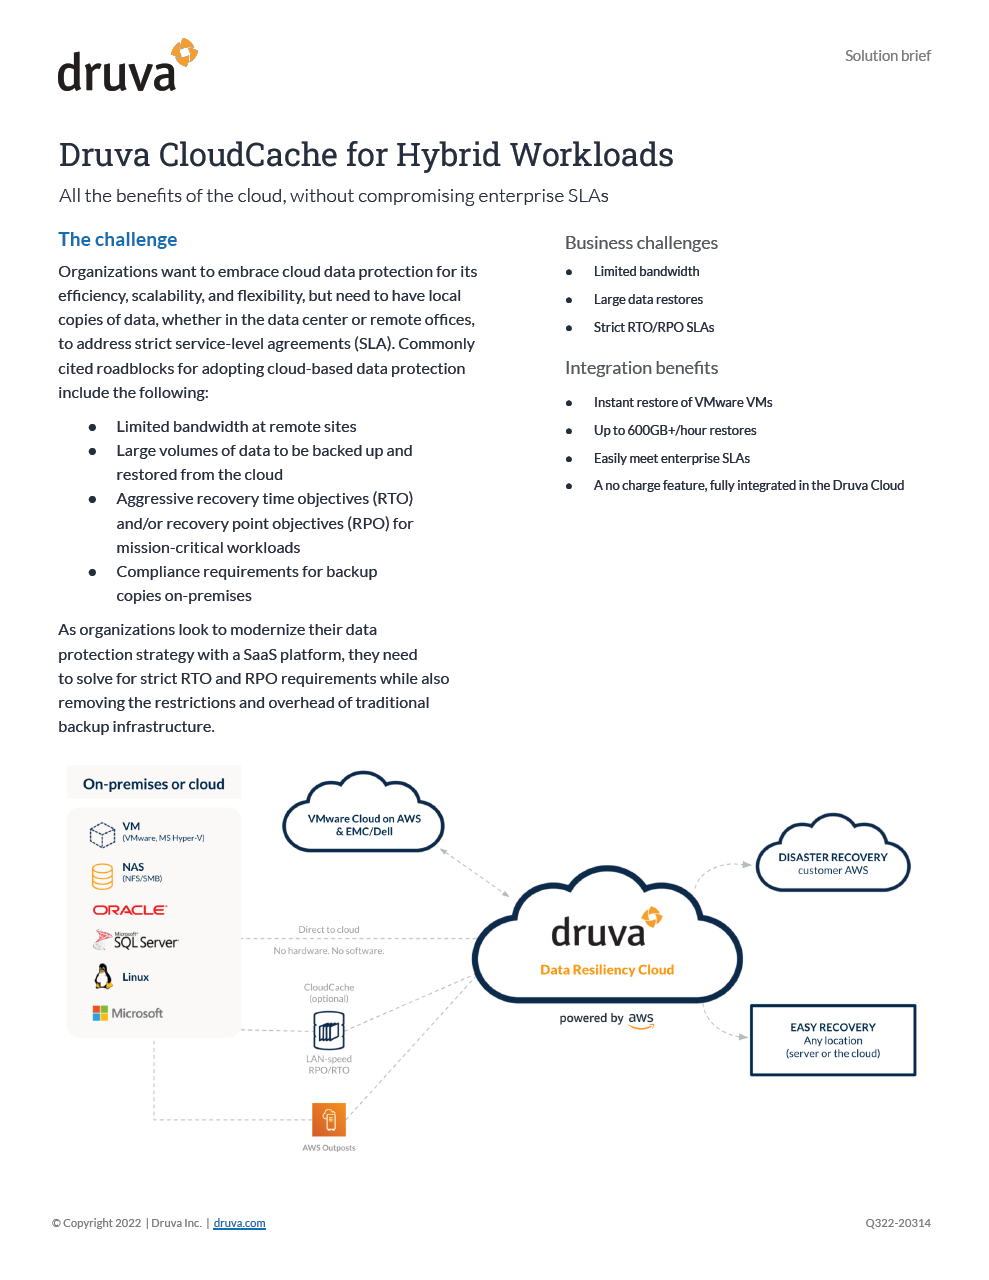 Druva CloudCache for Hybrid Workloads